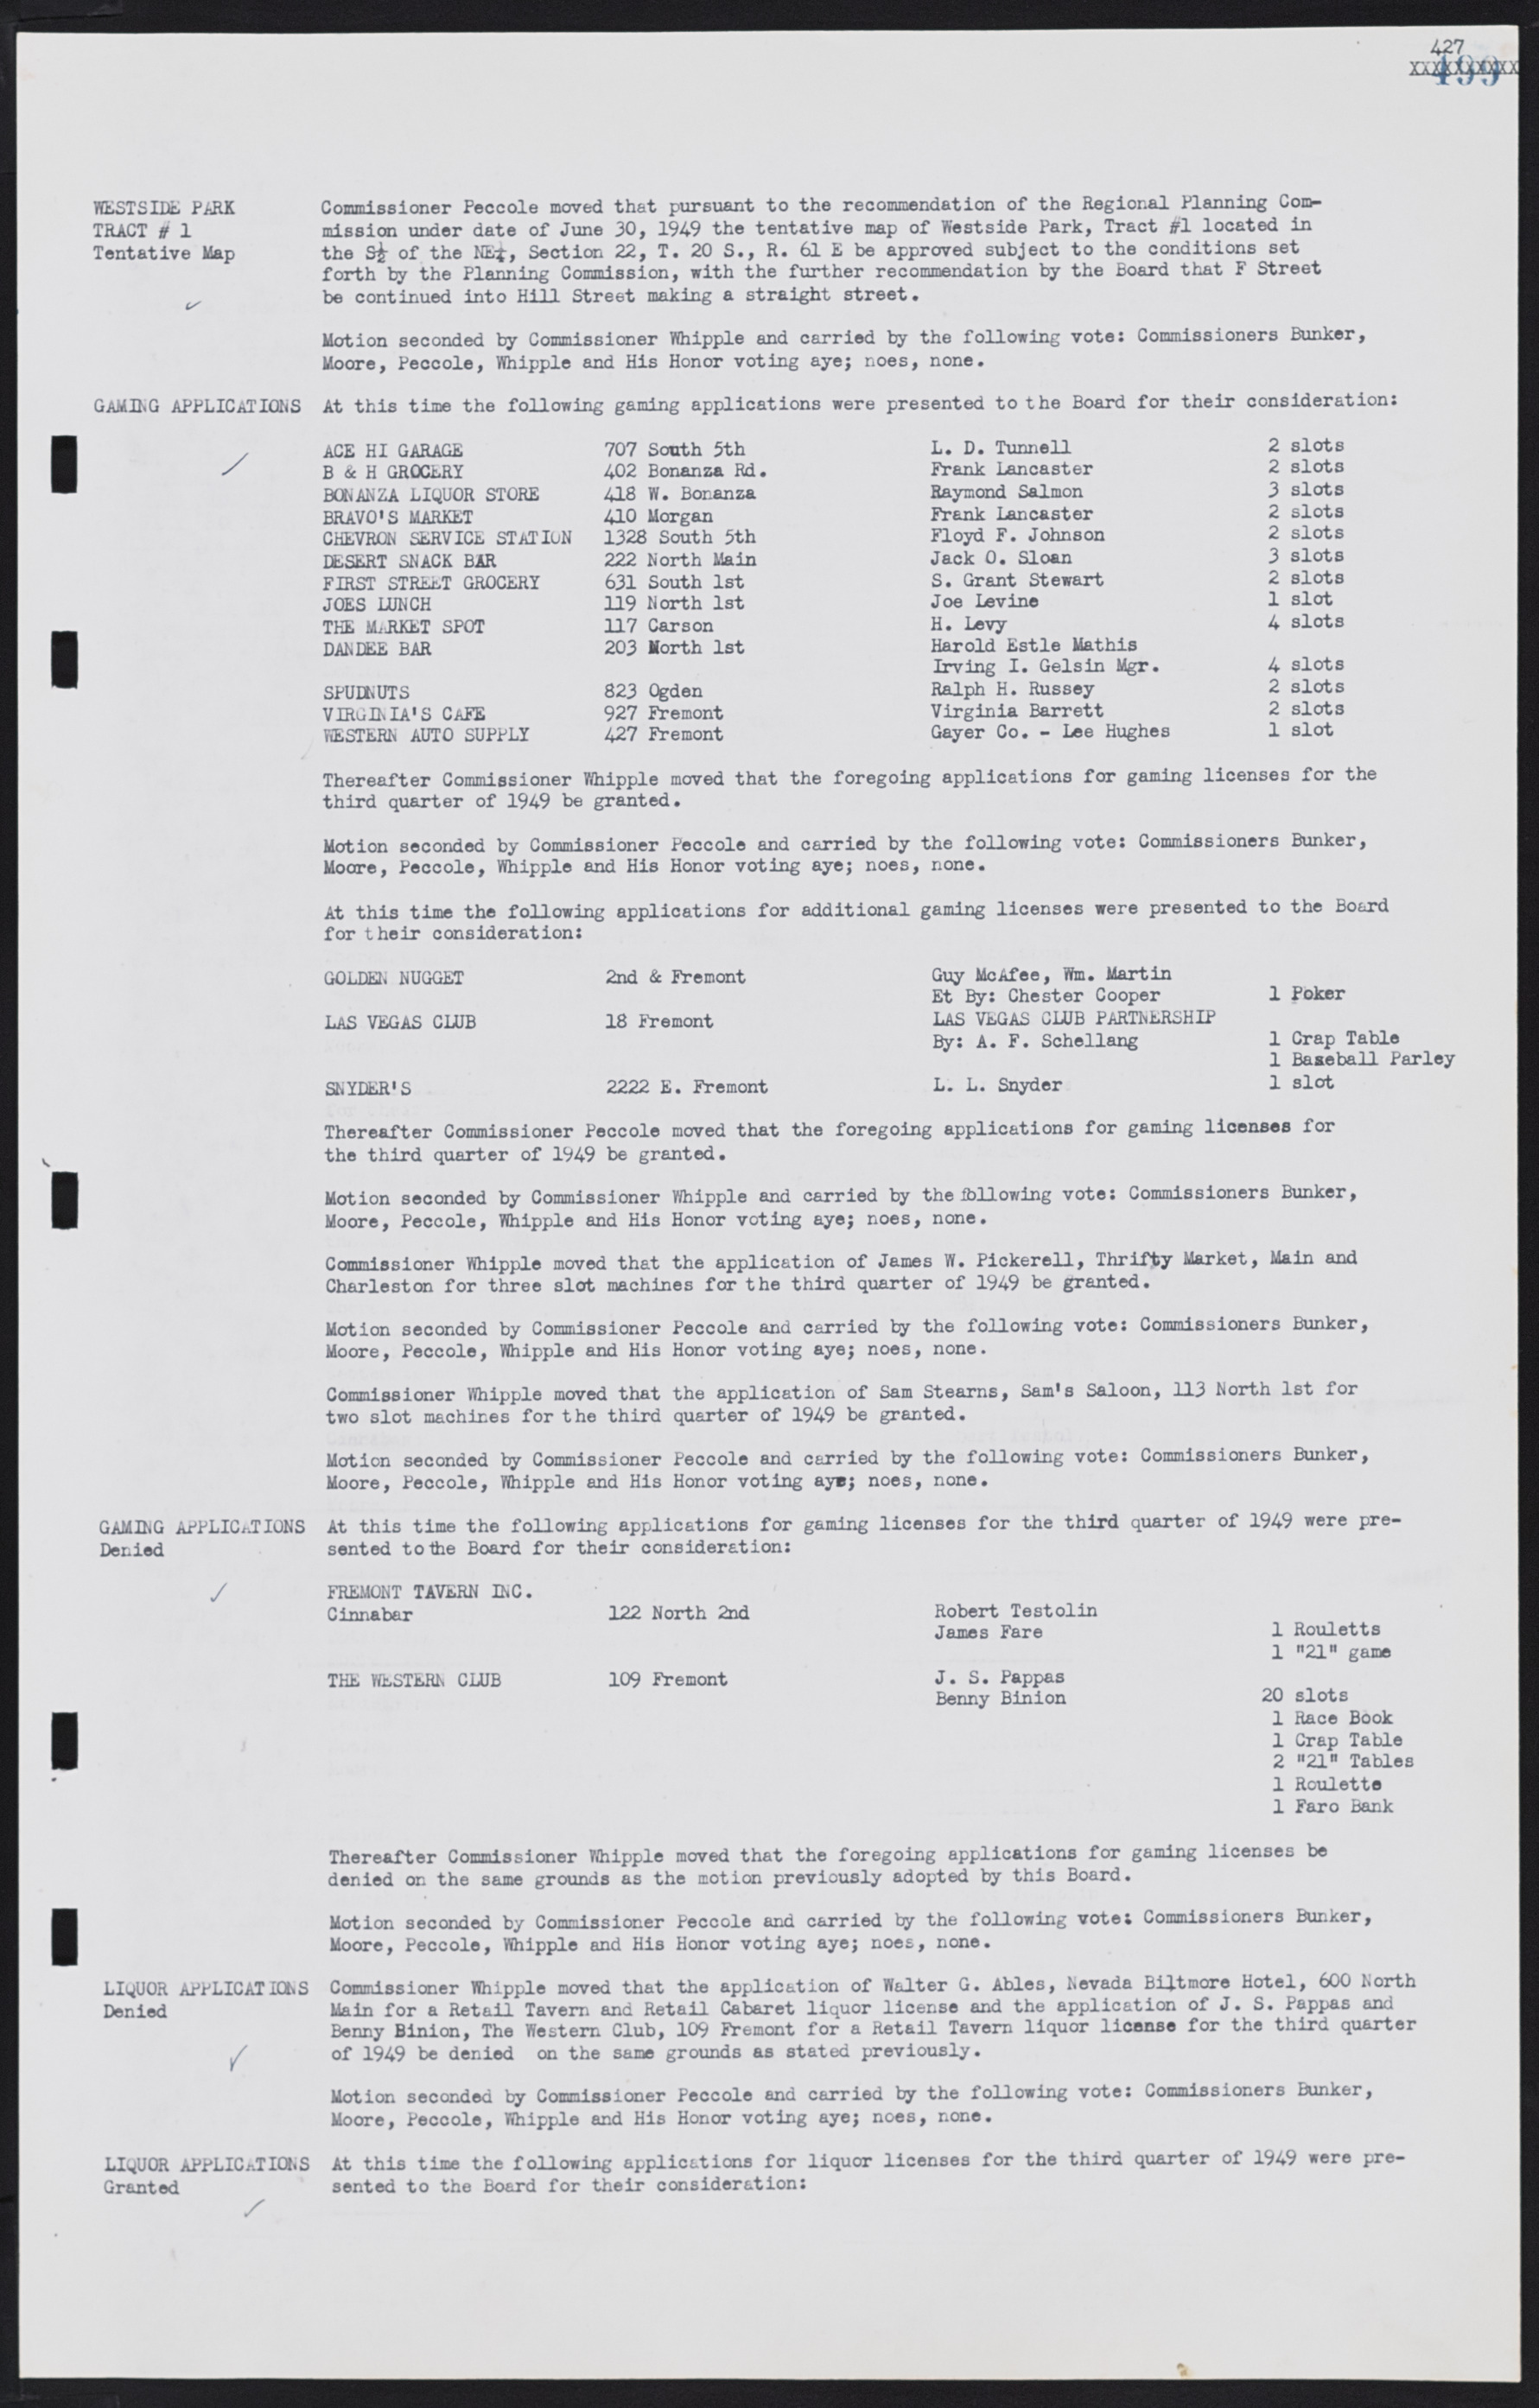 Las Vegas City Commission Minutes, January 7, 1947 to October 26, 1949, lvc000006-459